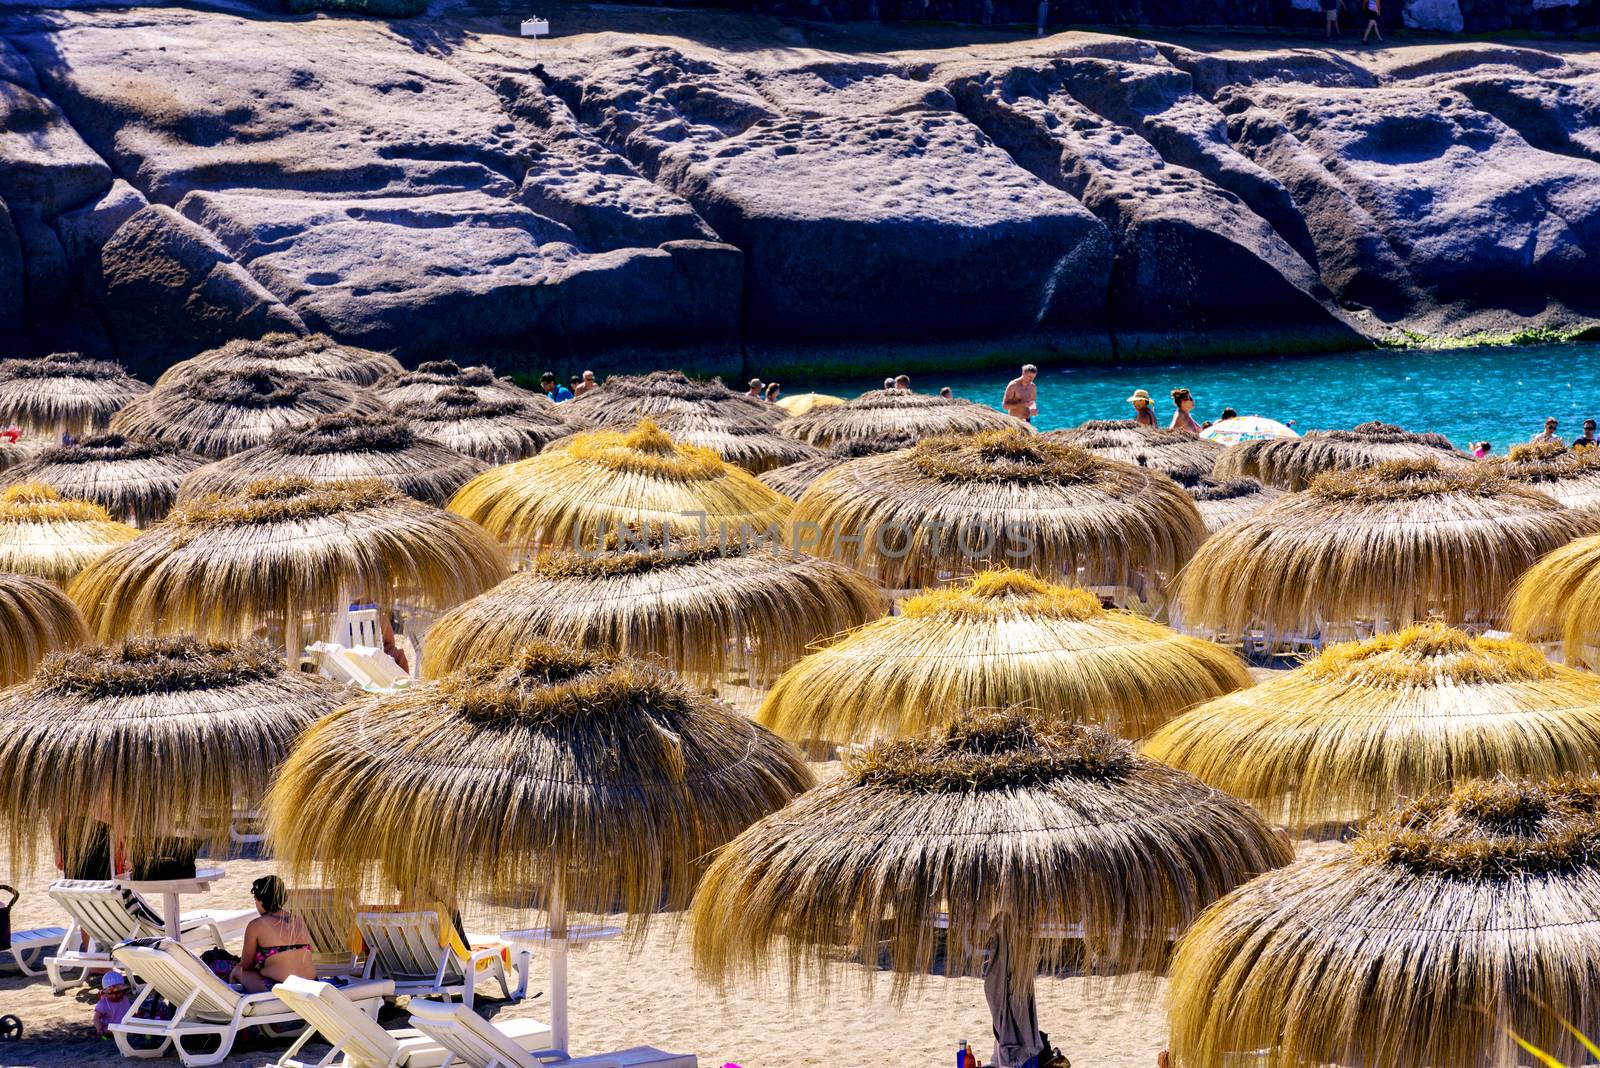 Straw umbrellas on Tenerife Island beach